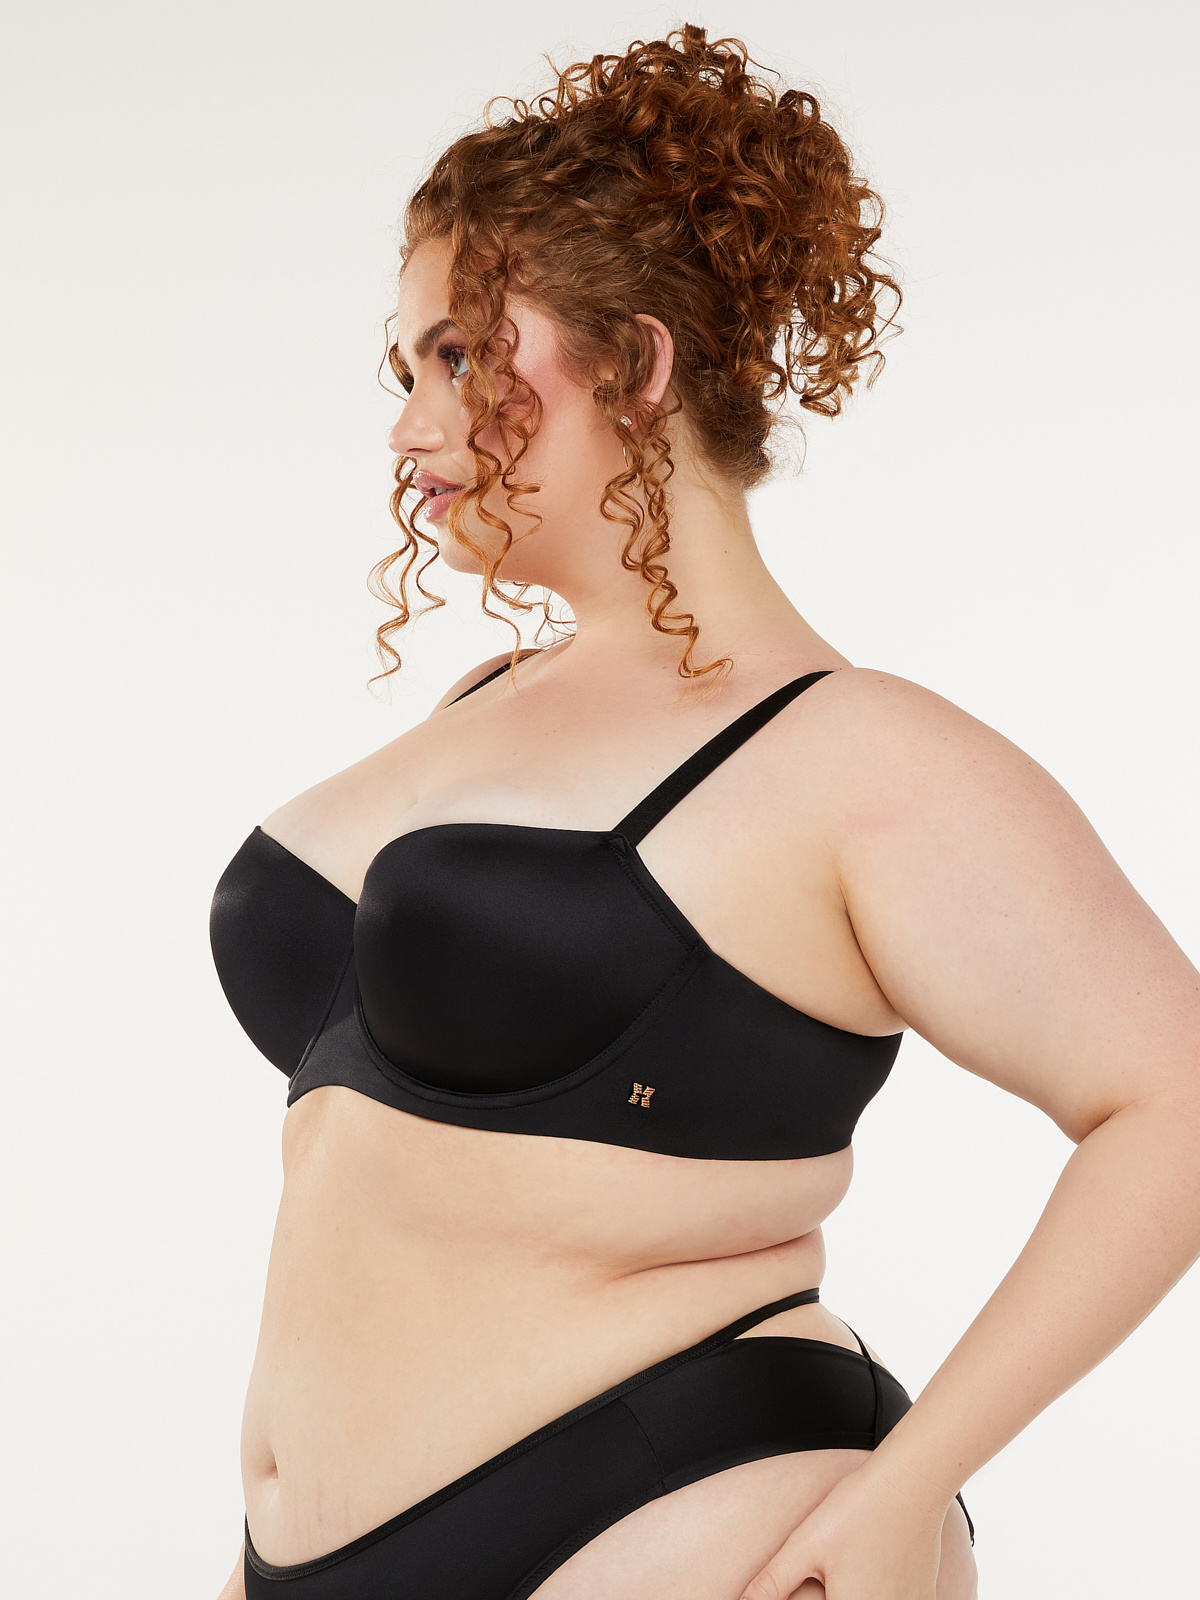 Trylo Intimates on X: No more bulky bra lines! RIZA BAE's sleek